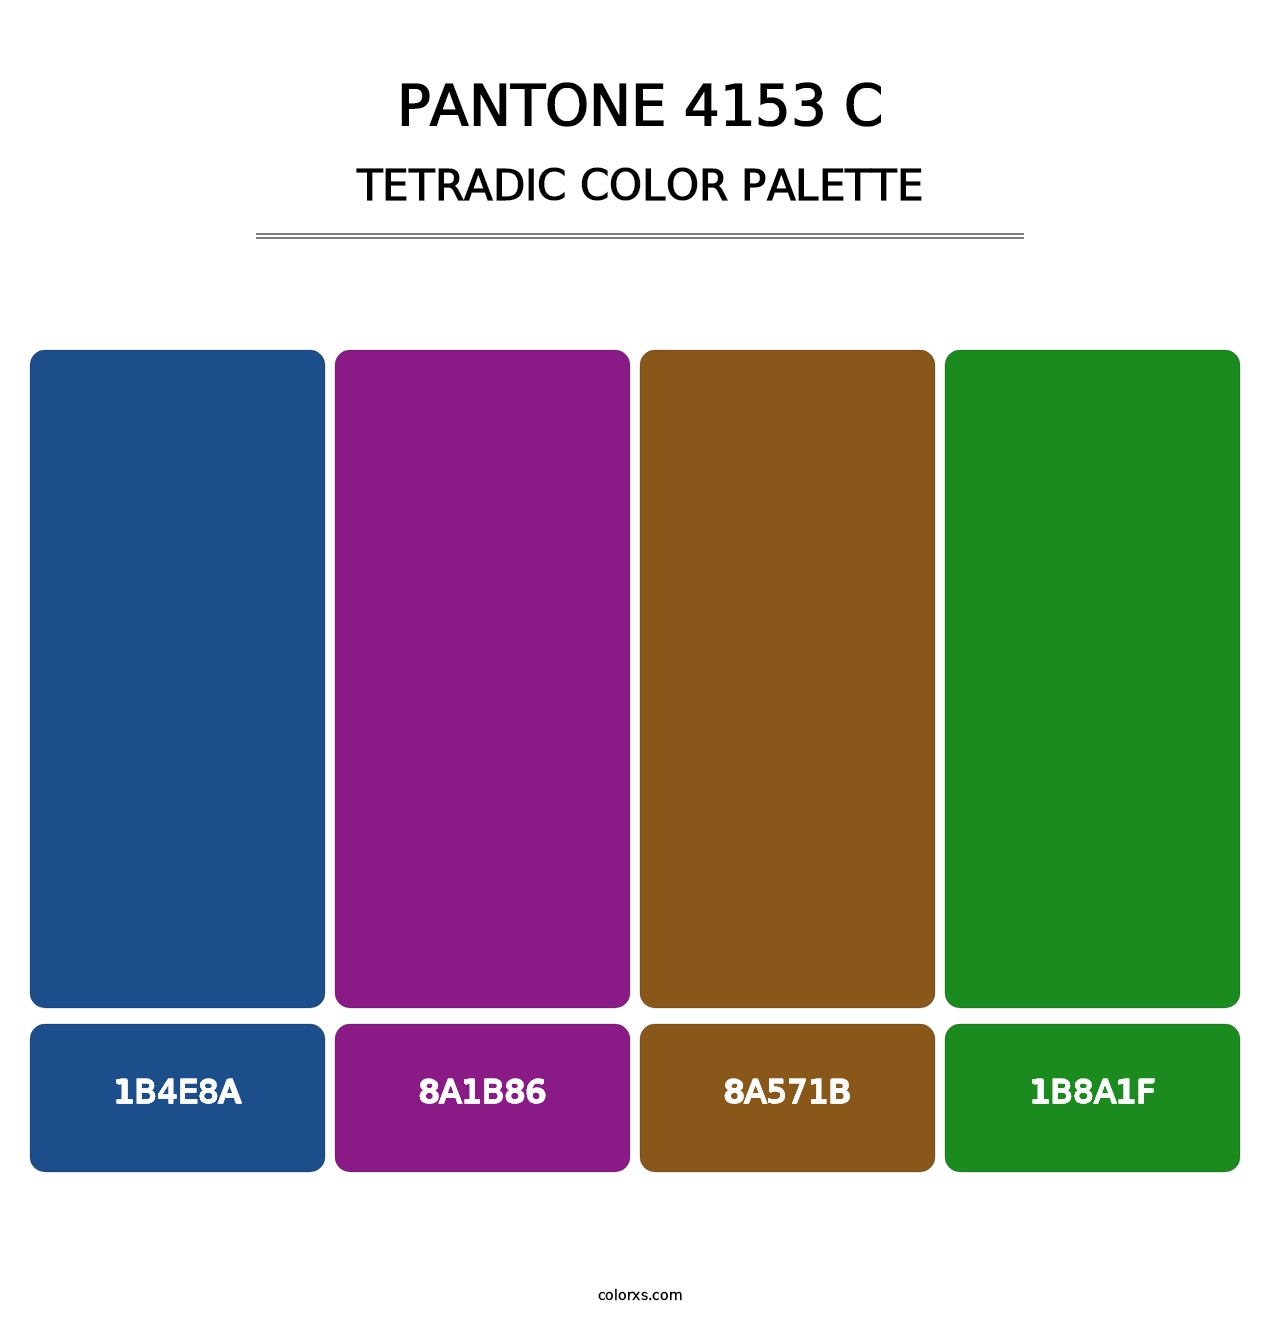 PANTONE 4153 C - Tetradic Color Palette